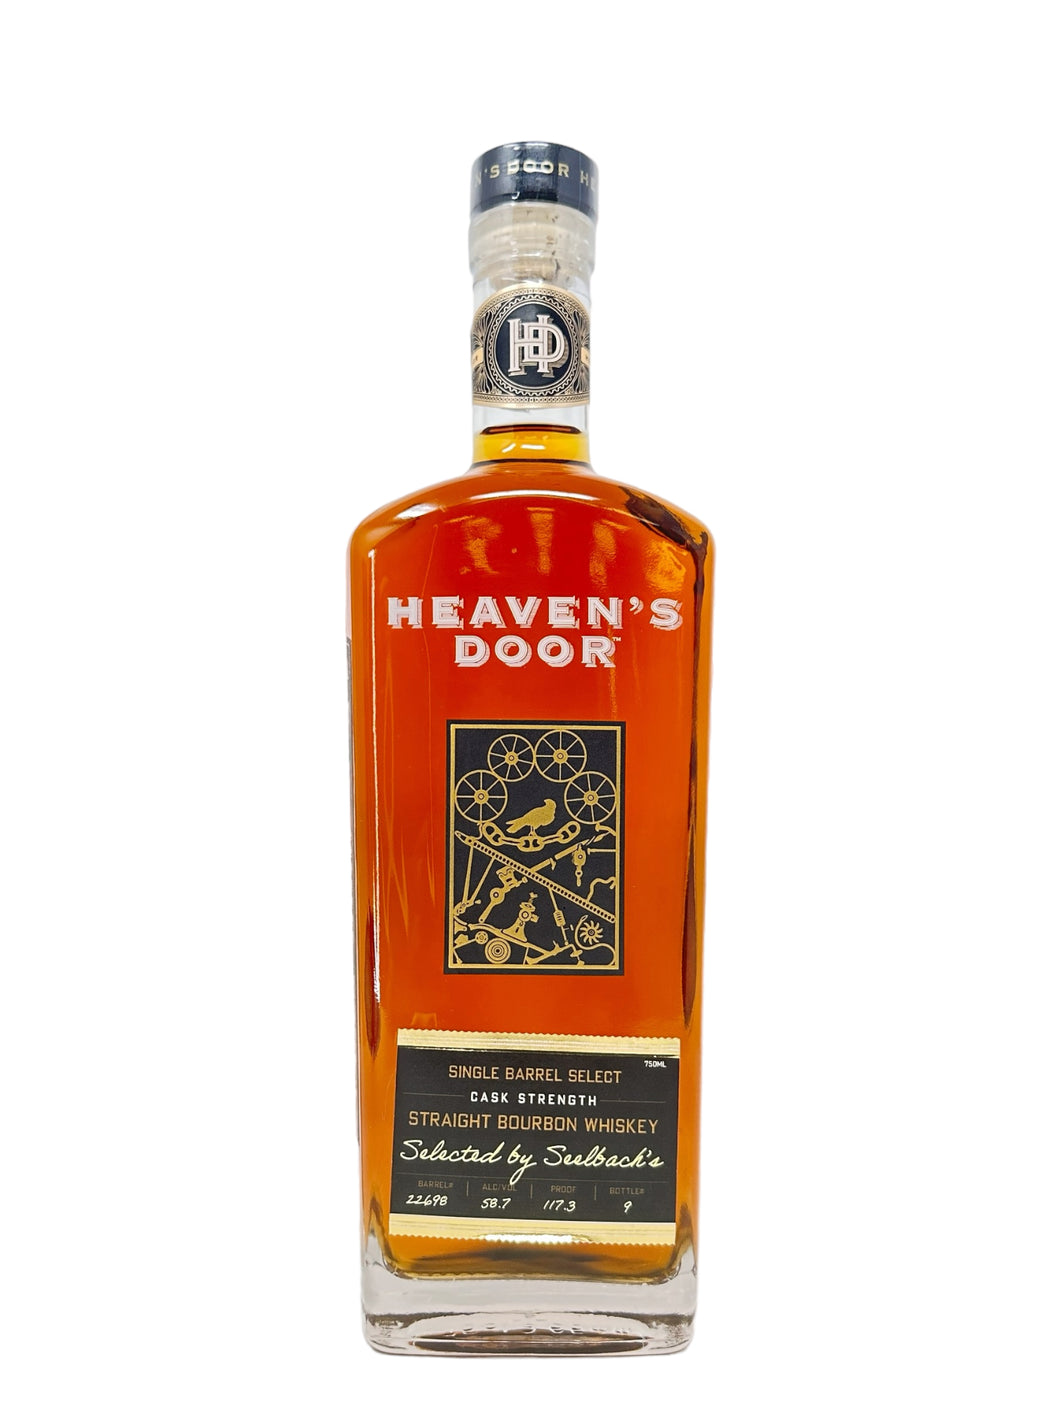 Heaven's Door Single Barrel Bourbon 117.3 Proof #22698 - Selected by Seelbach's